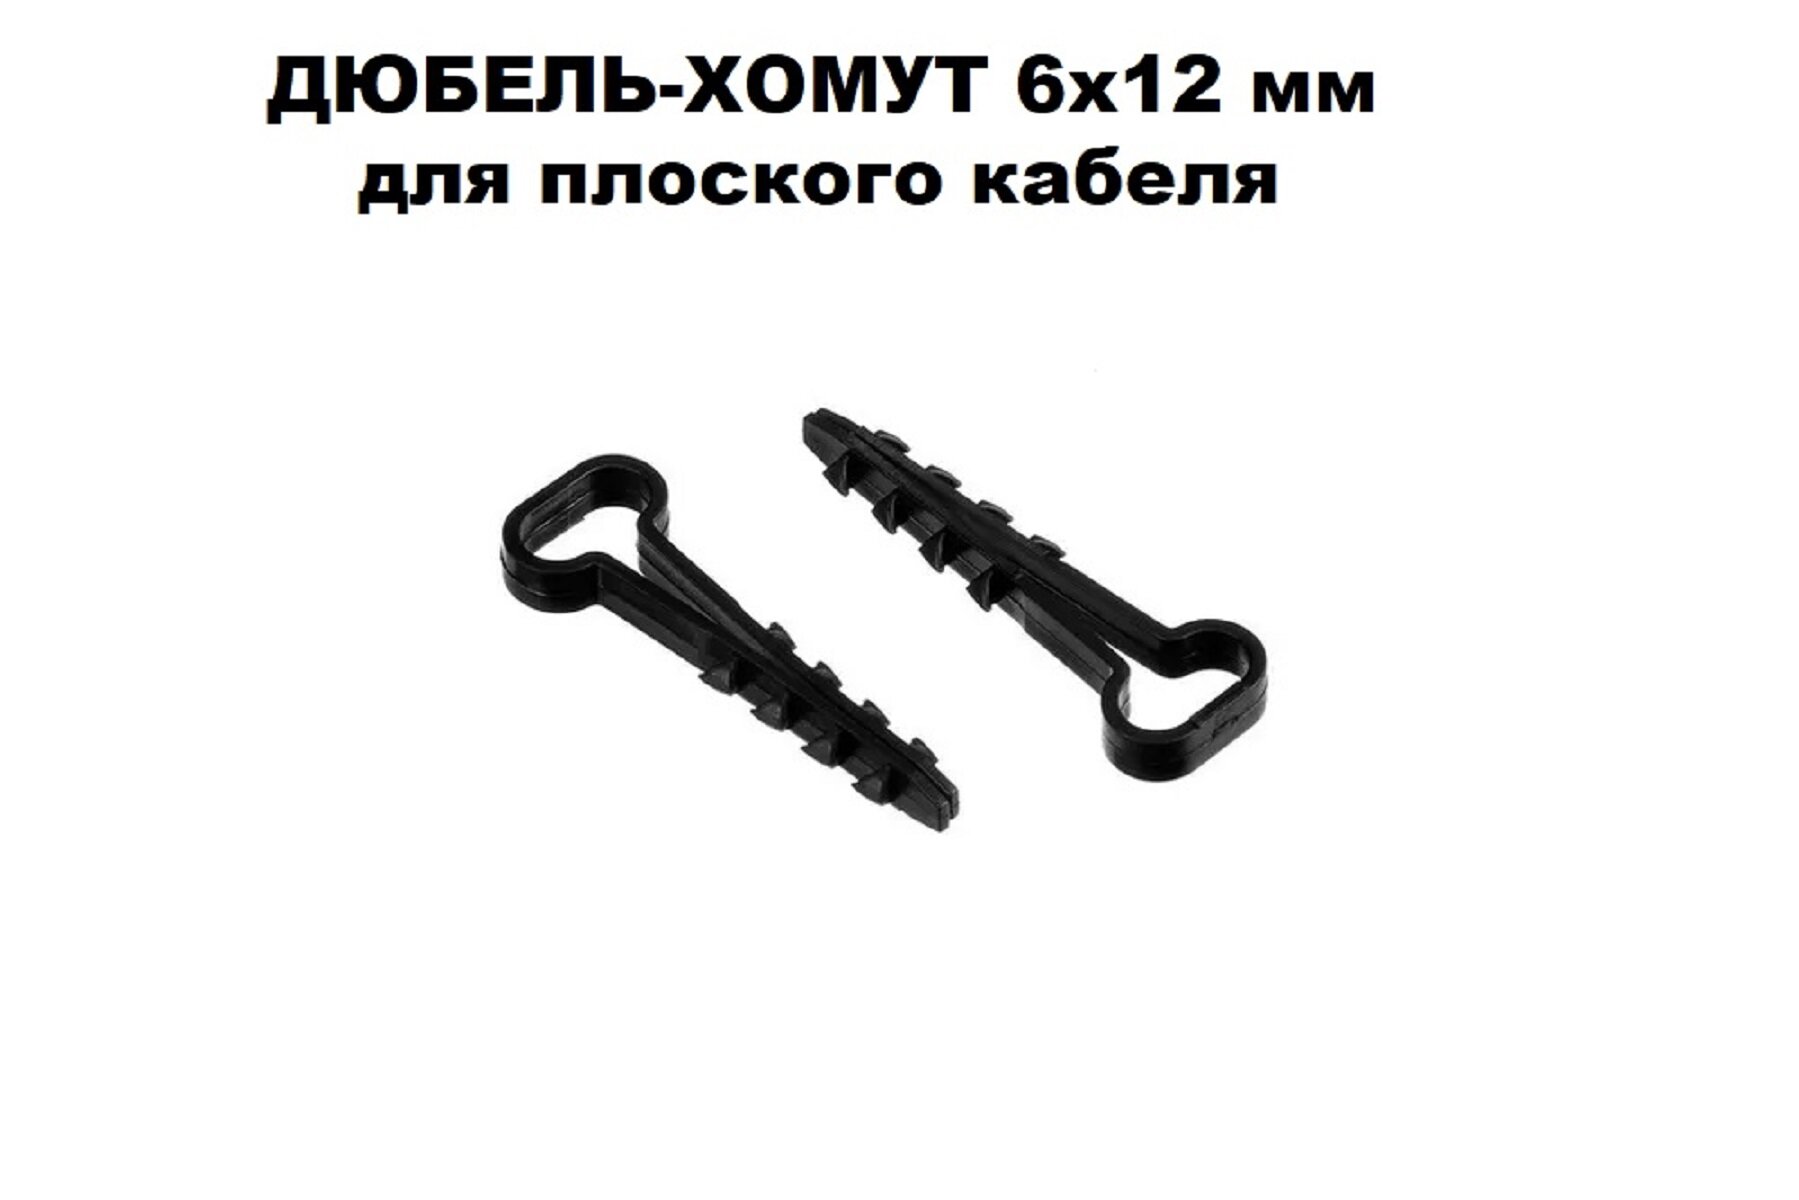 Дюбель-хомут DM PLAST Чёрный 6х12 мм. для плоского кабеля 100шт.